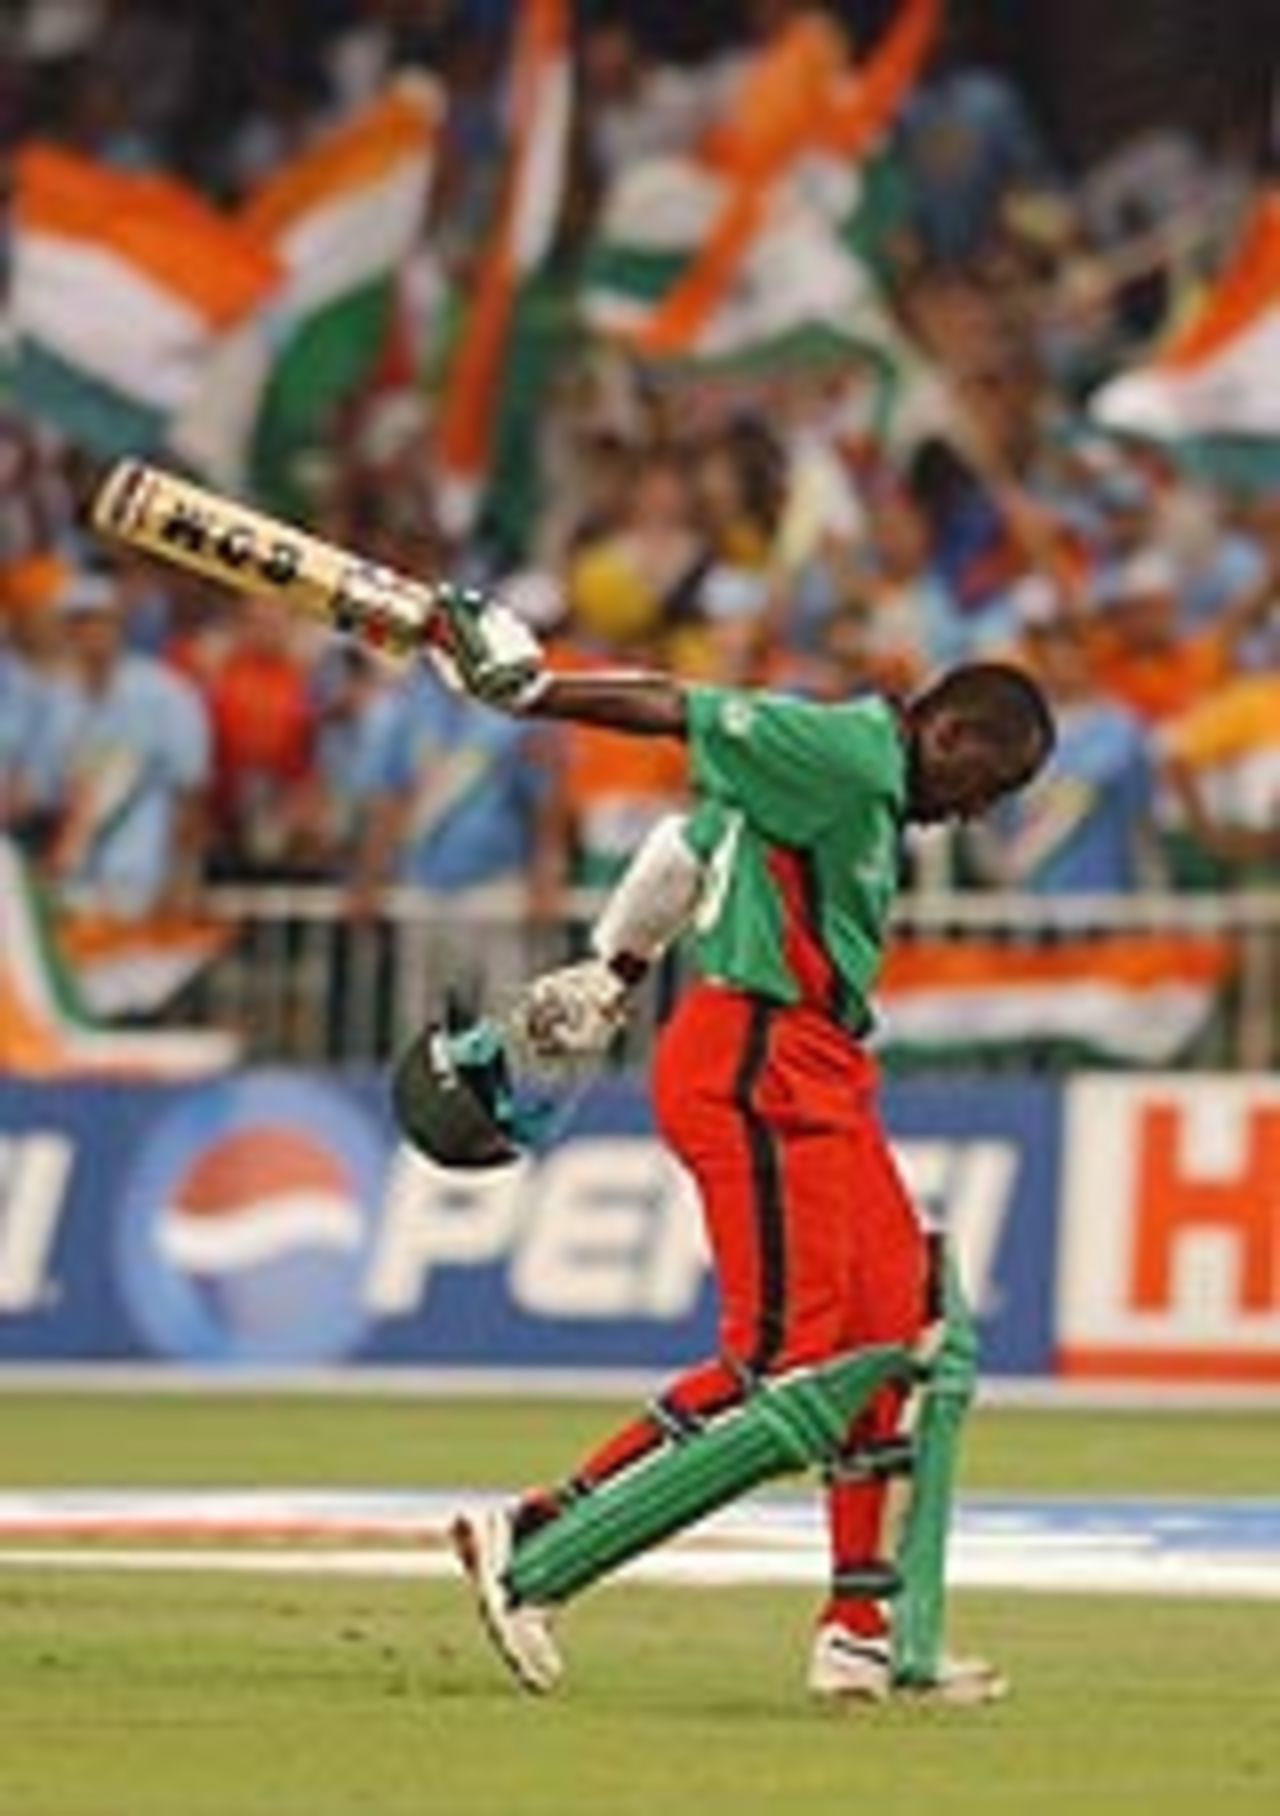 Maurice Odumbe returns to pavilion, Kenya v India, World Cup semi-final 2003